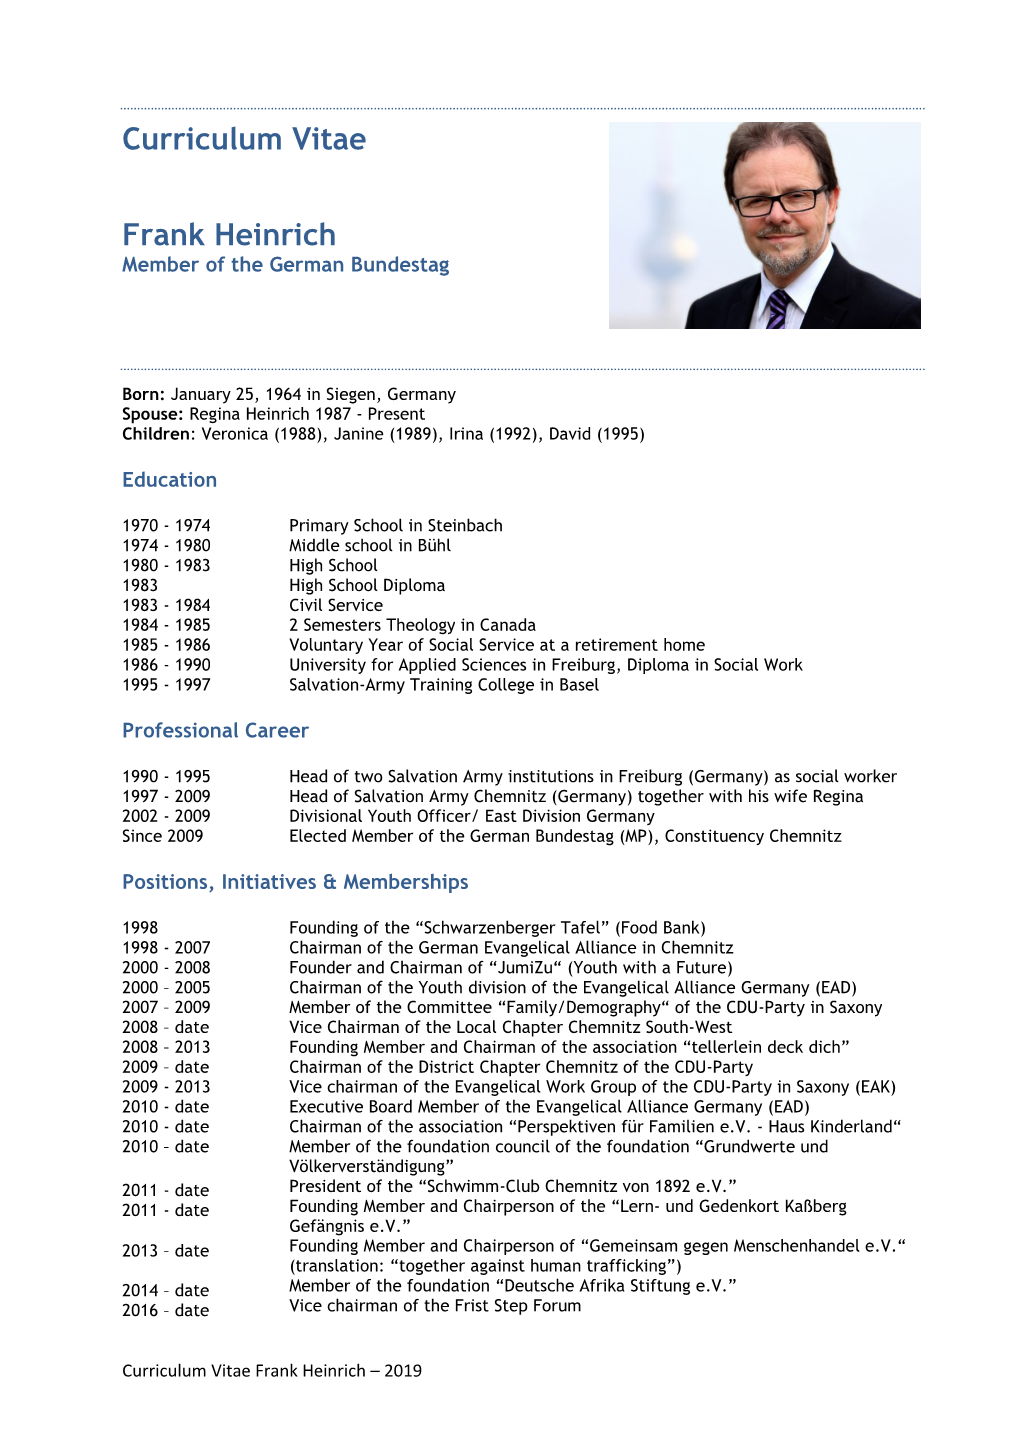 Curriculum Vitae Frank Heinrich – 2019 Parliamentary Functions – 19Th Legislature